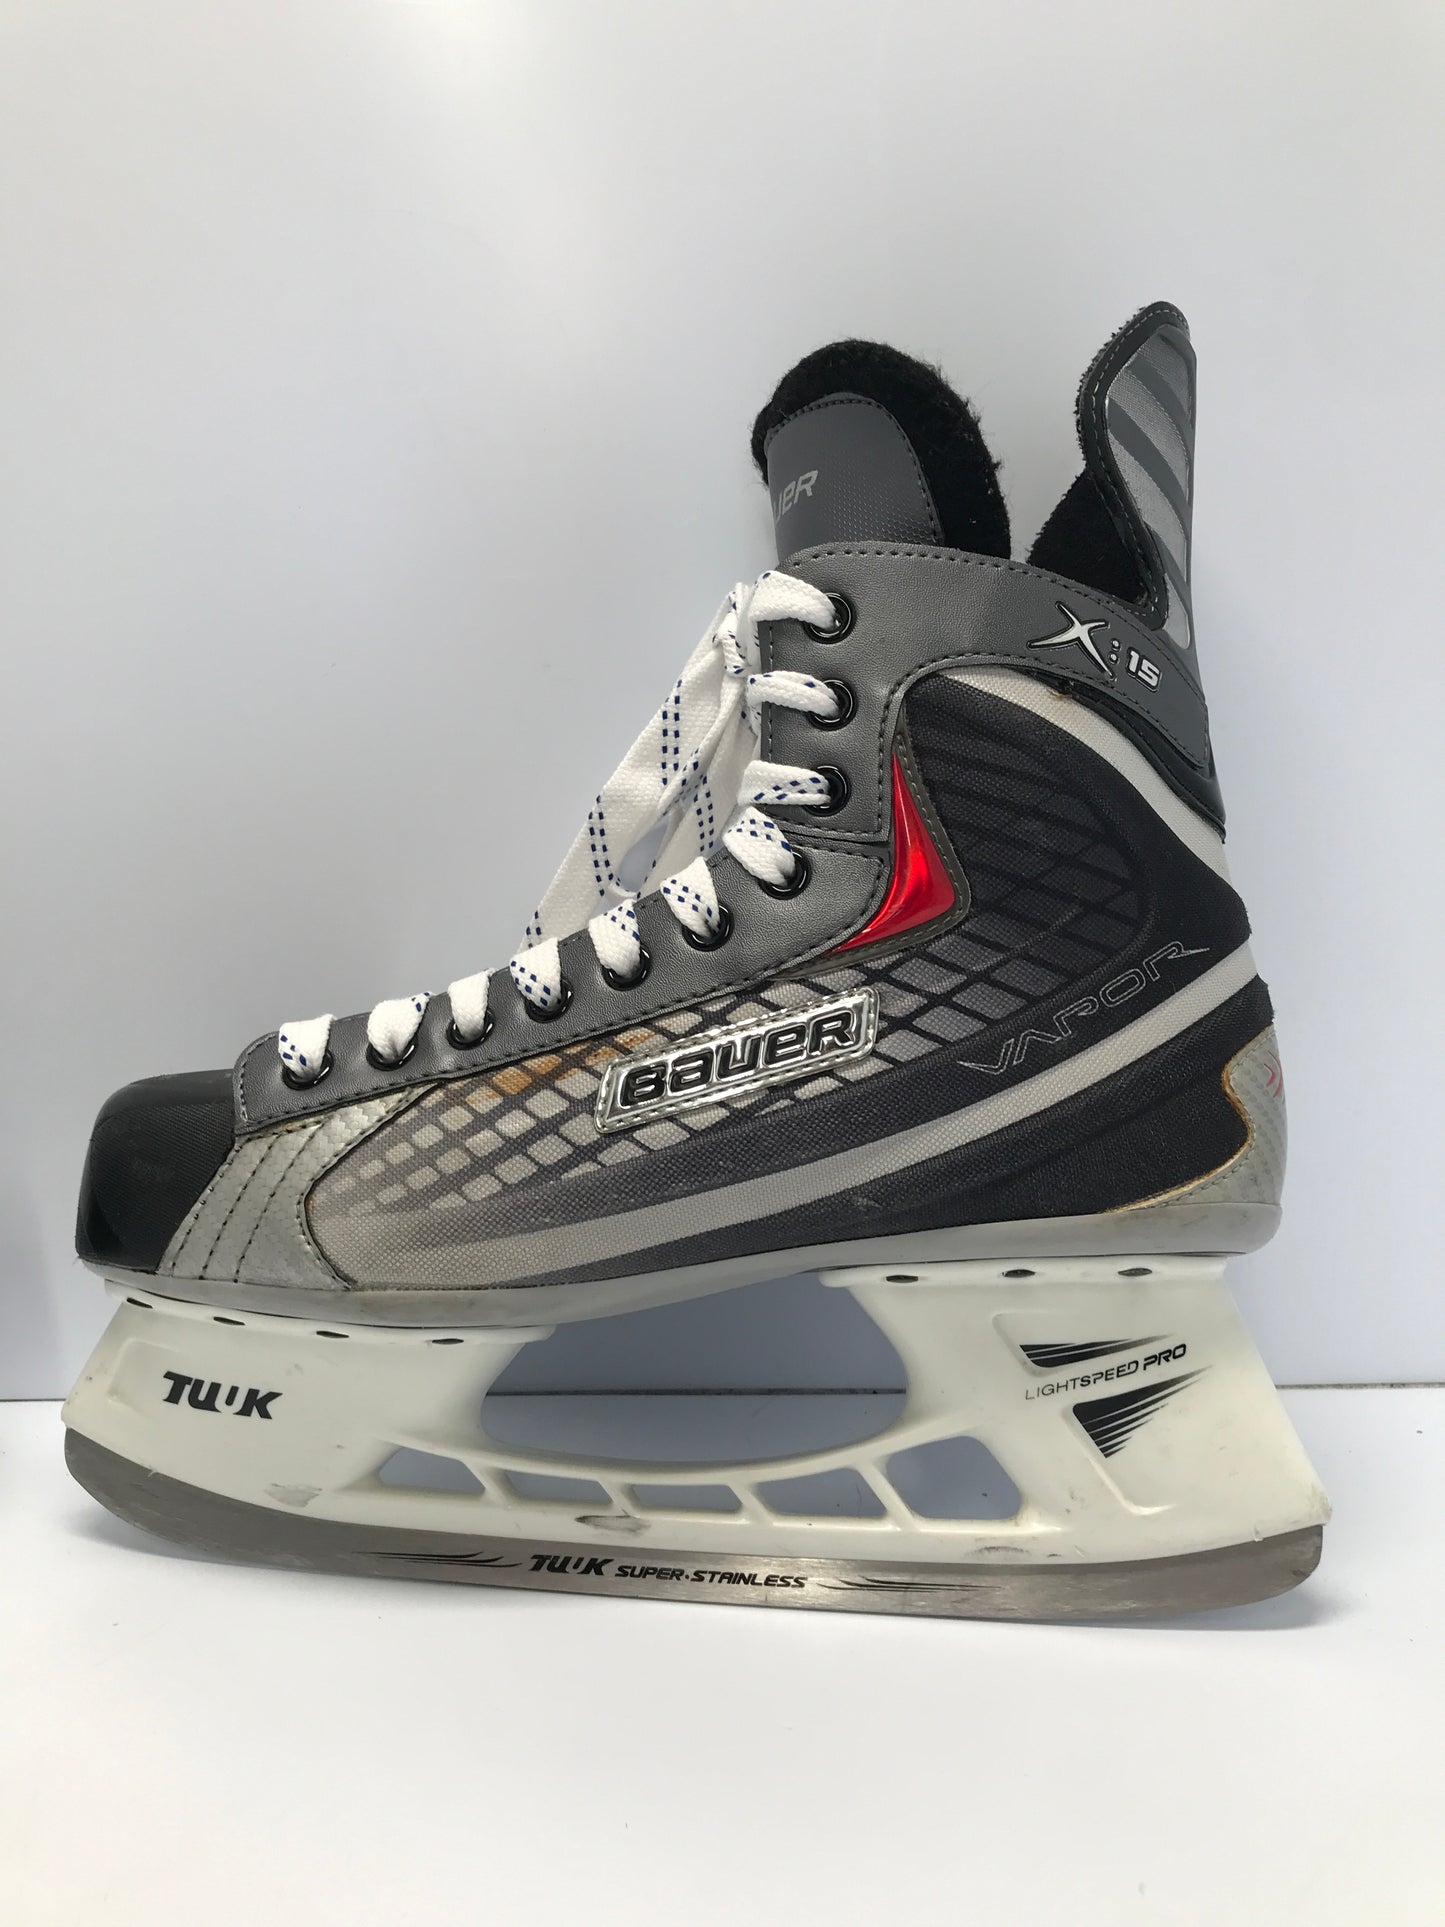 Hockey Skates Men's Size 12 Shoe Size 10.5 Skate Size Bauer Vapor Like New